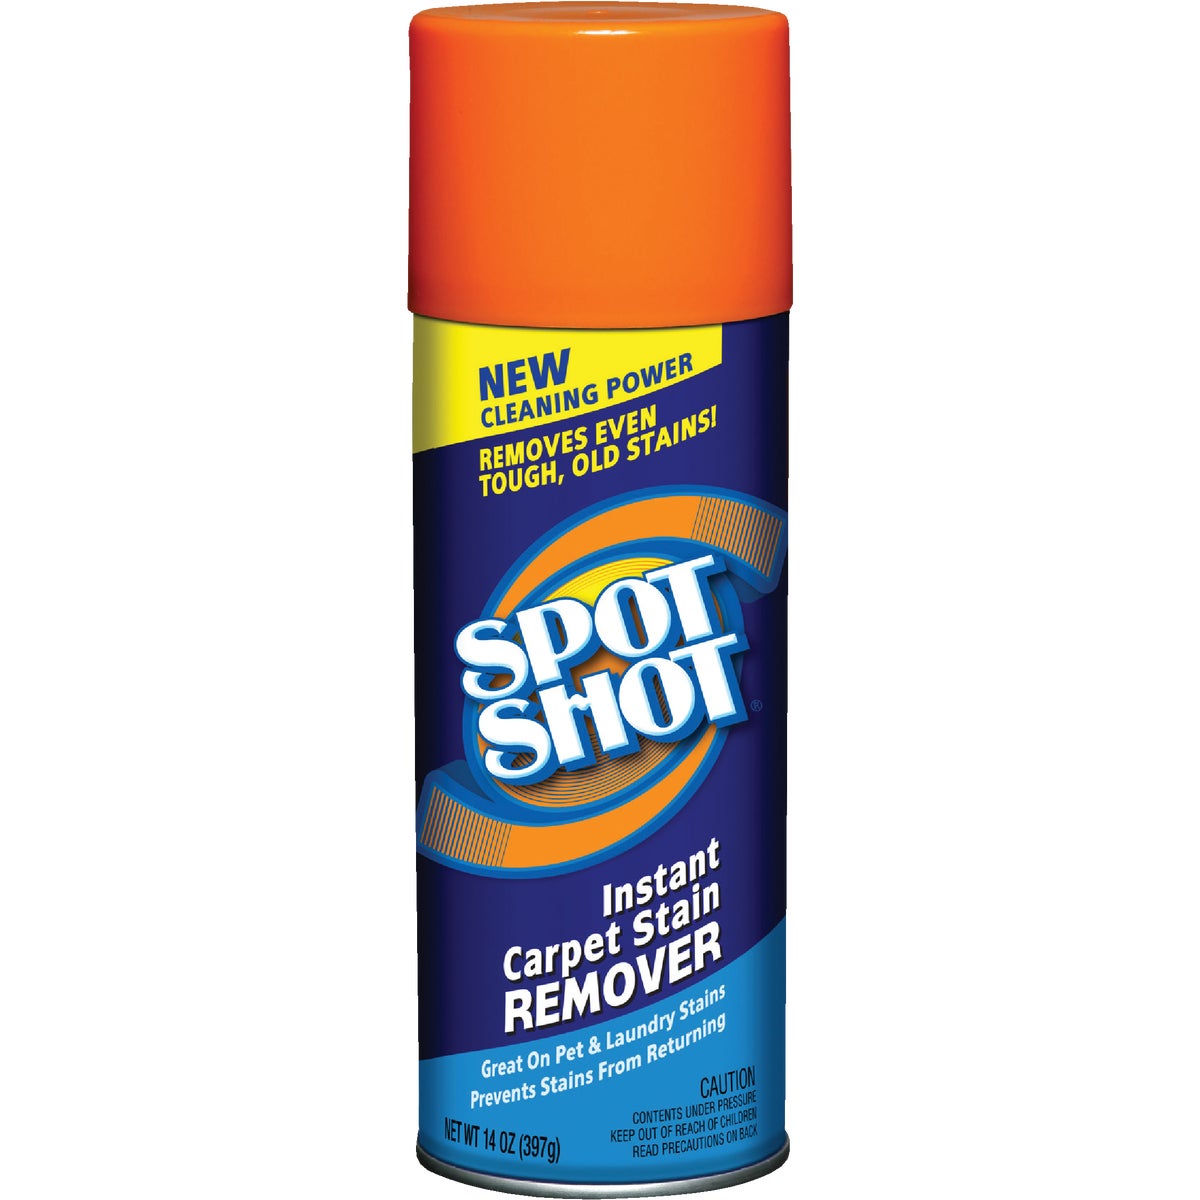 Item 626384, For stubborn carpet stains that won't go away, try Spot Shot Instant Carpet